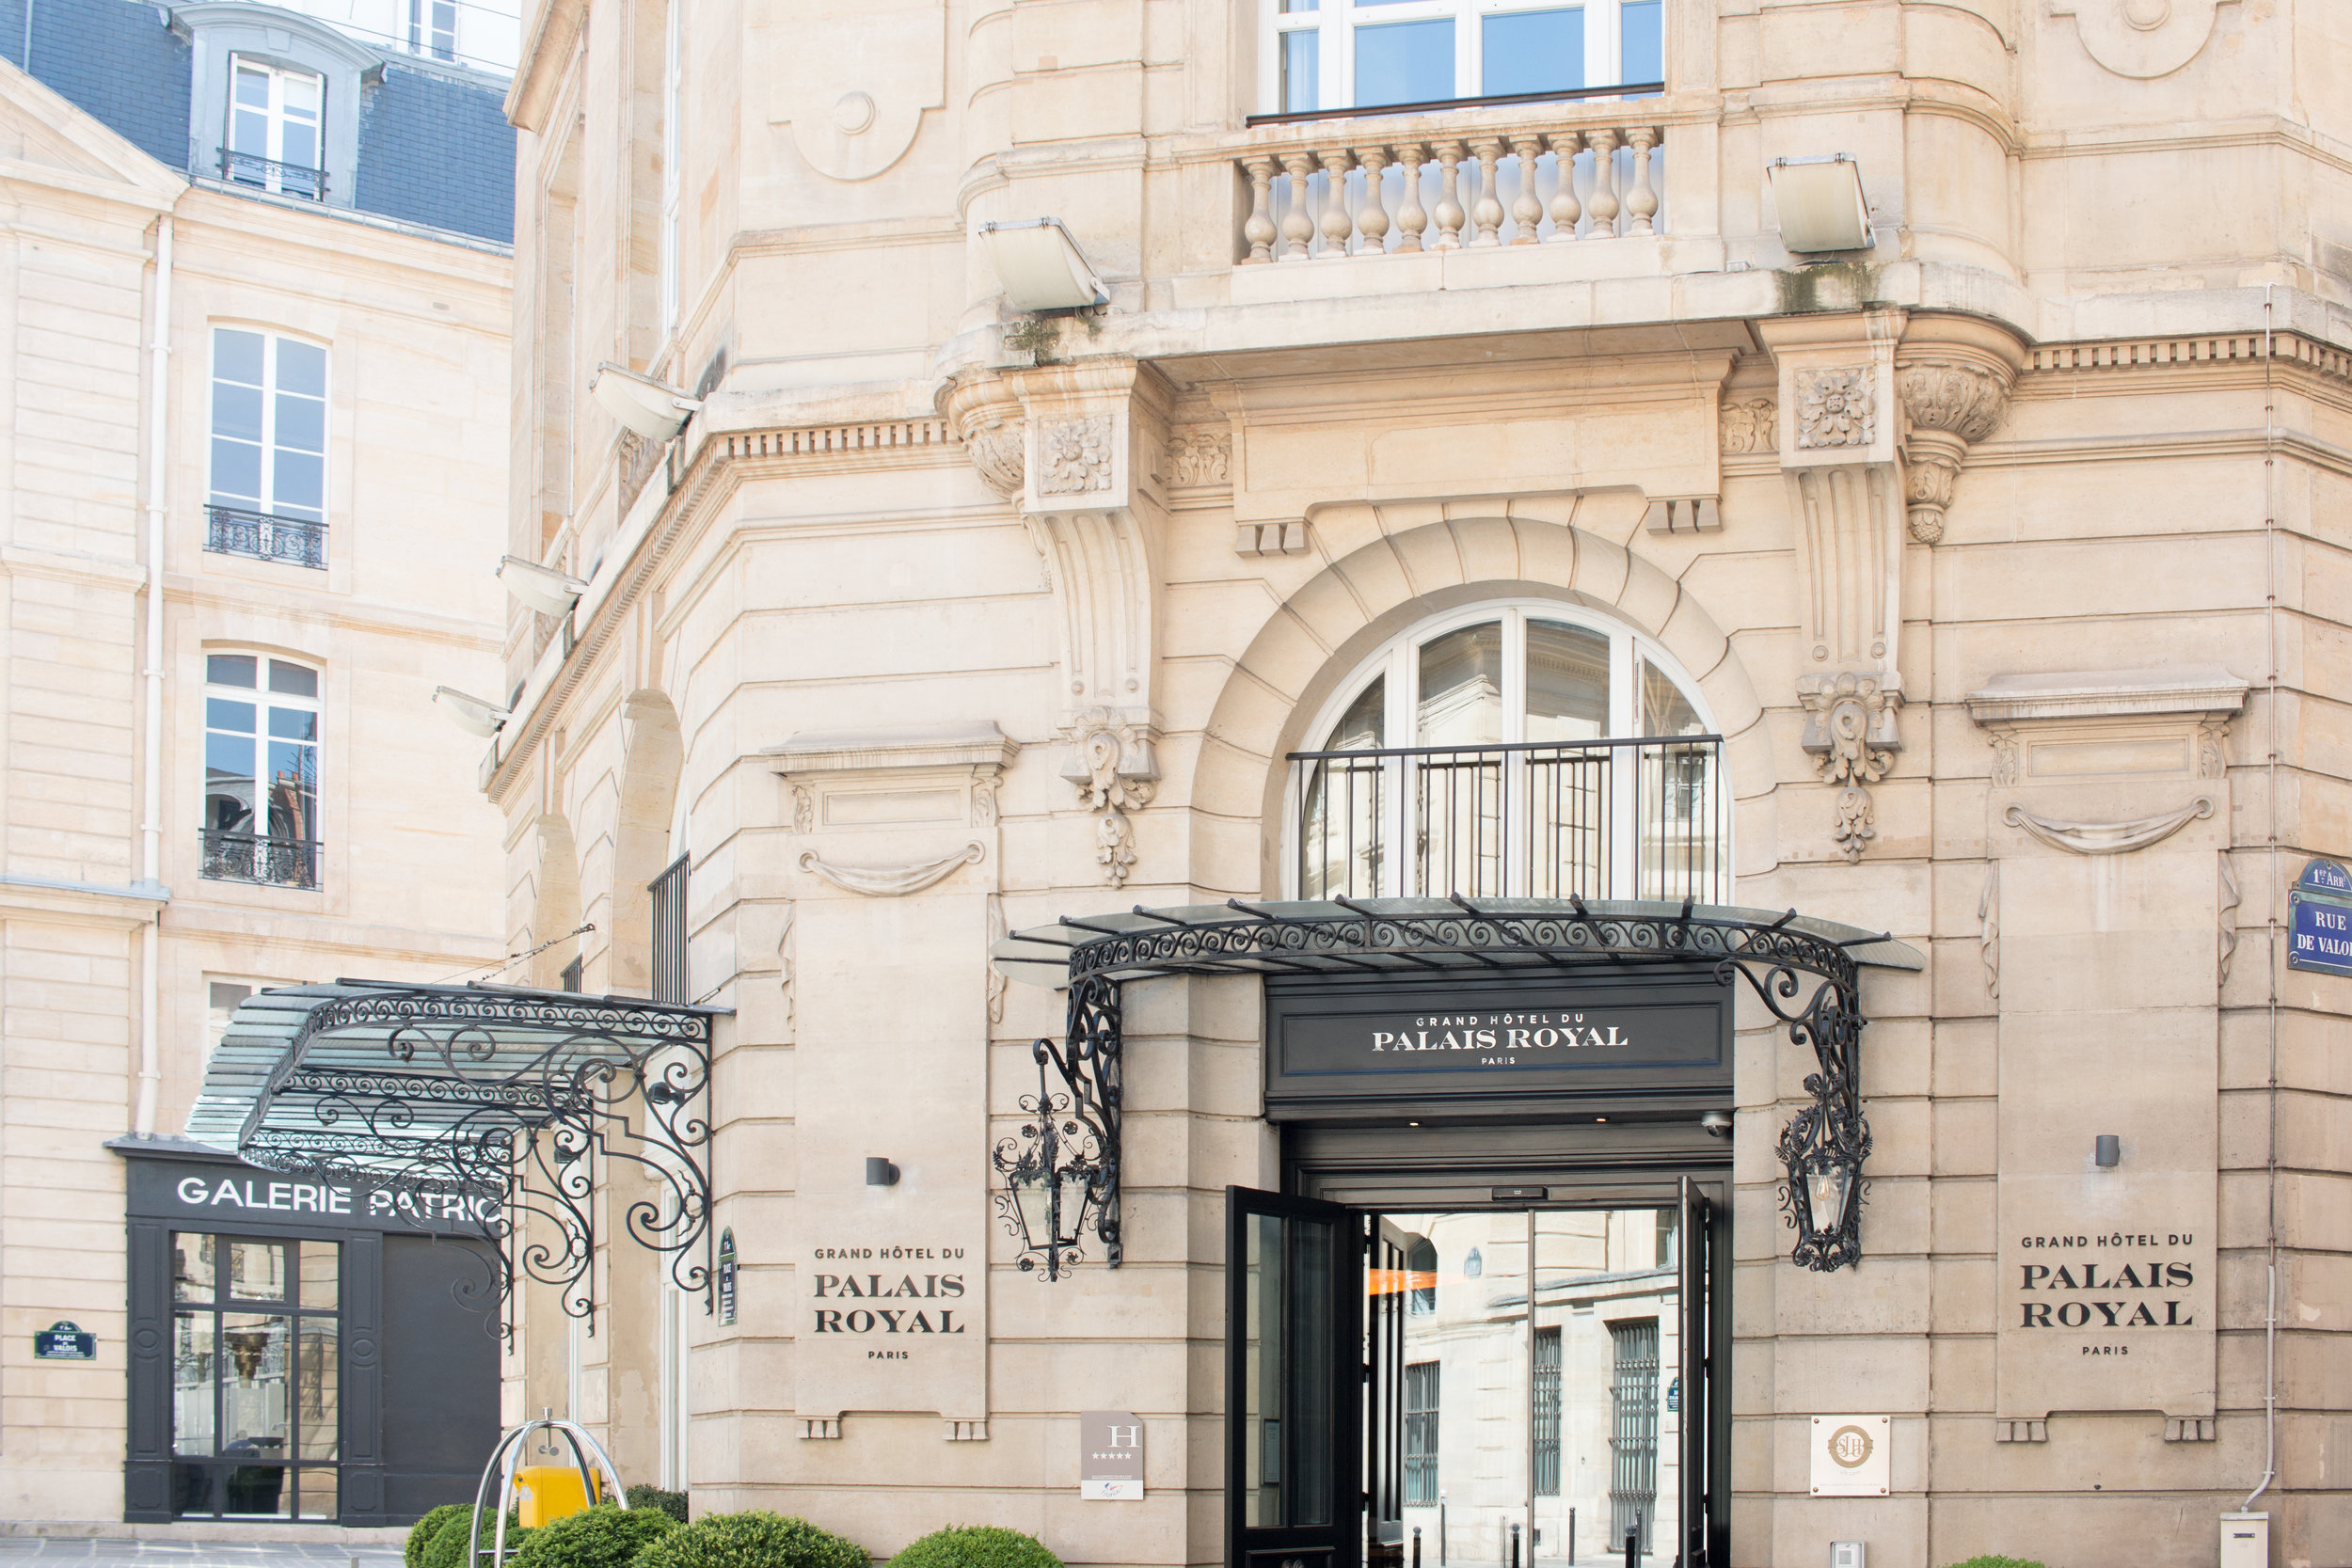 Grand Hotel Du Palais Royal Every Day Parisian Every Day Parisian